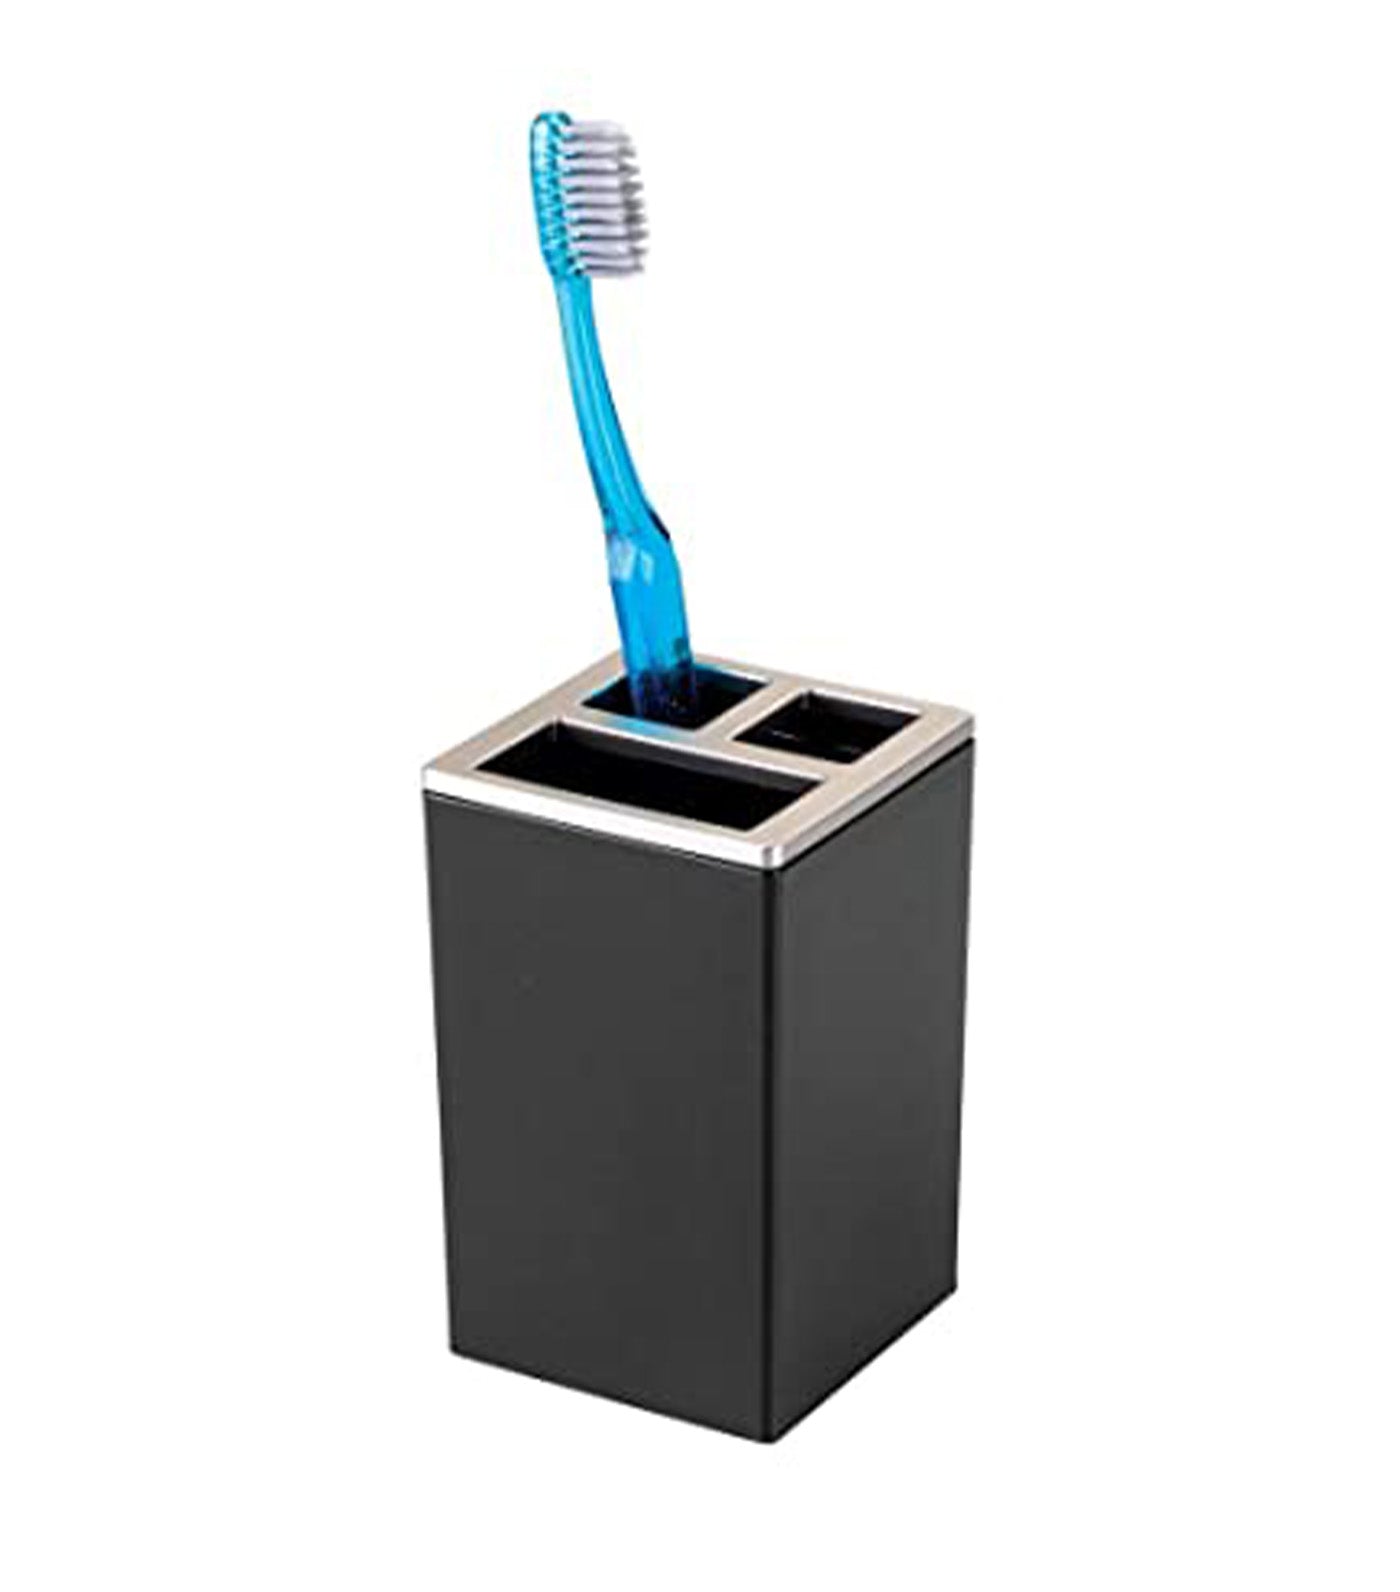 MakeRoom Clarity Toothbrush Holder - Black/Brushed